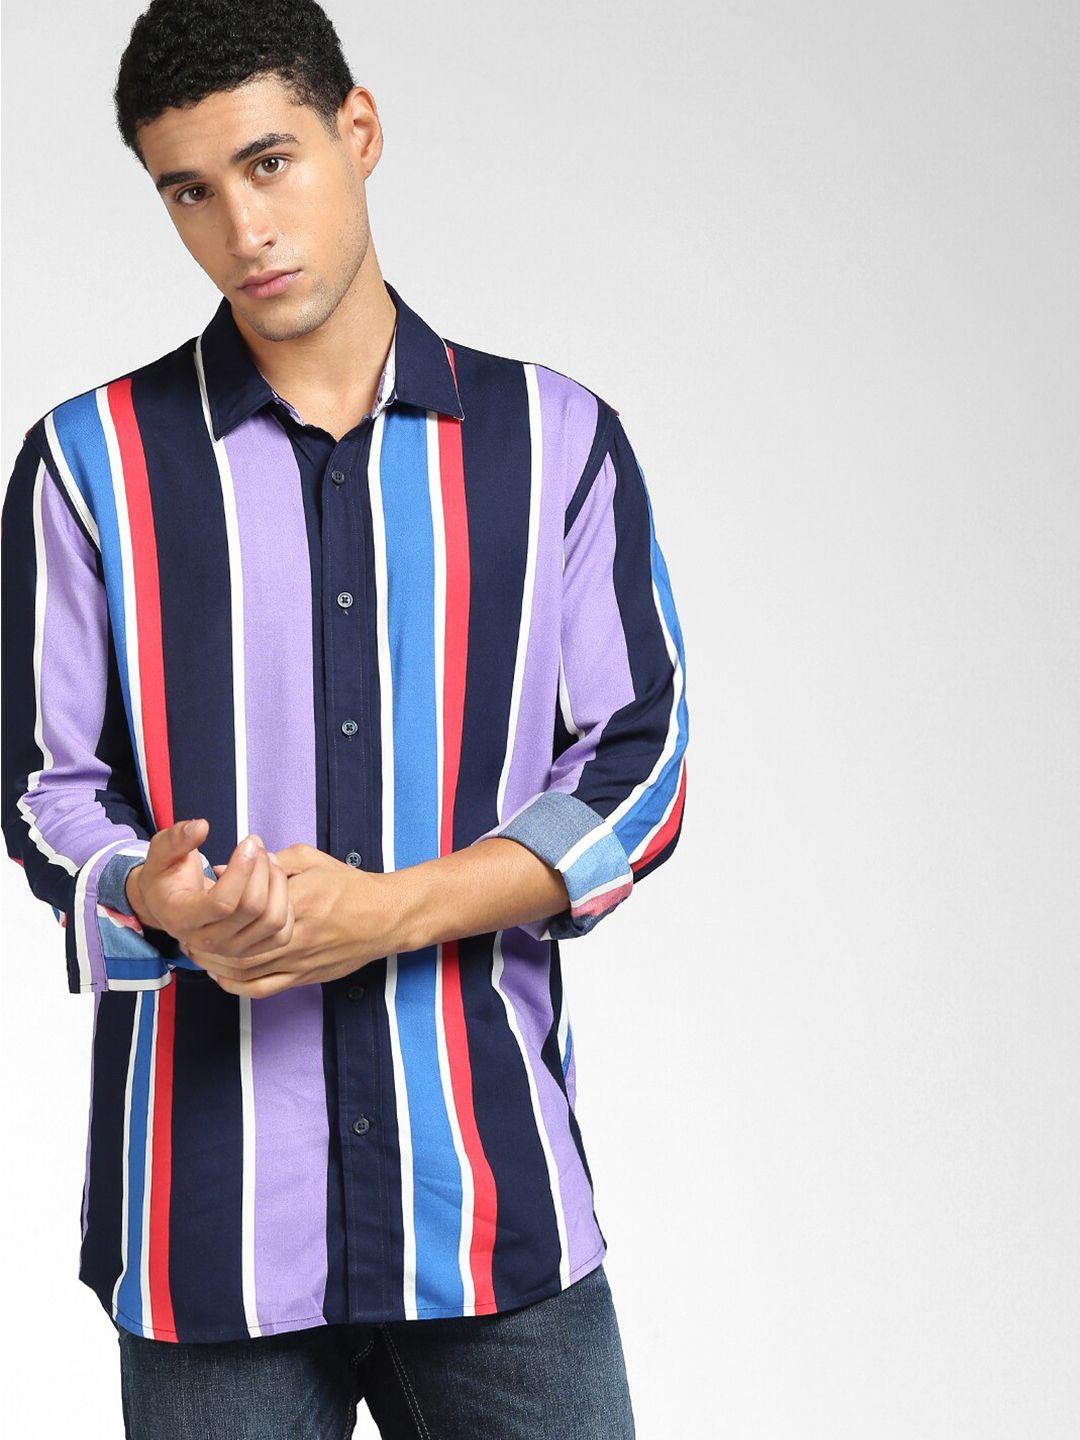 jack & jones men violet & navy blue striped casual shirt